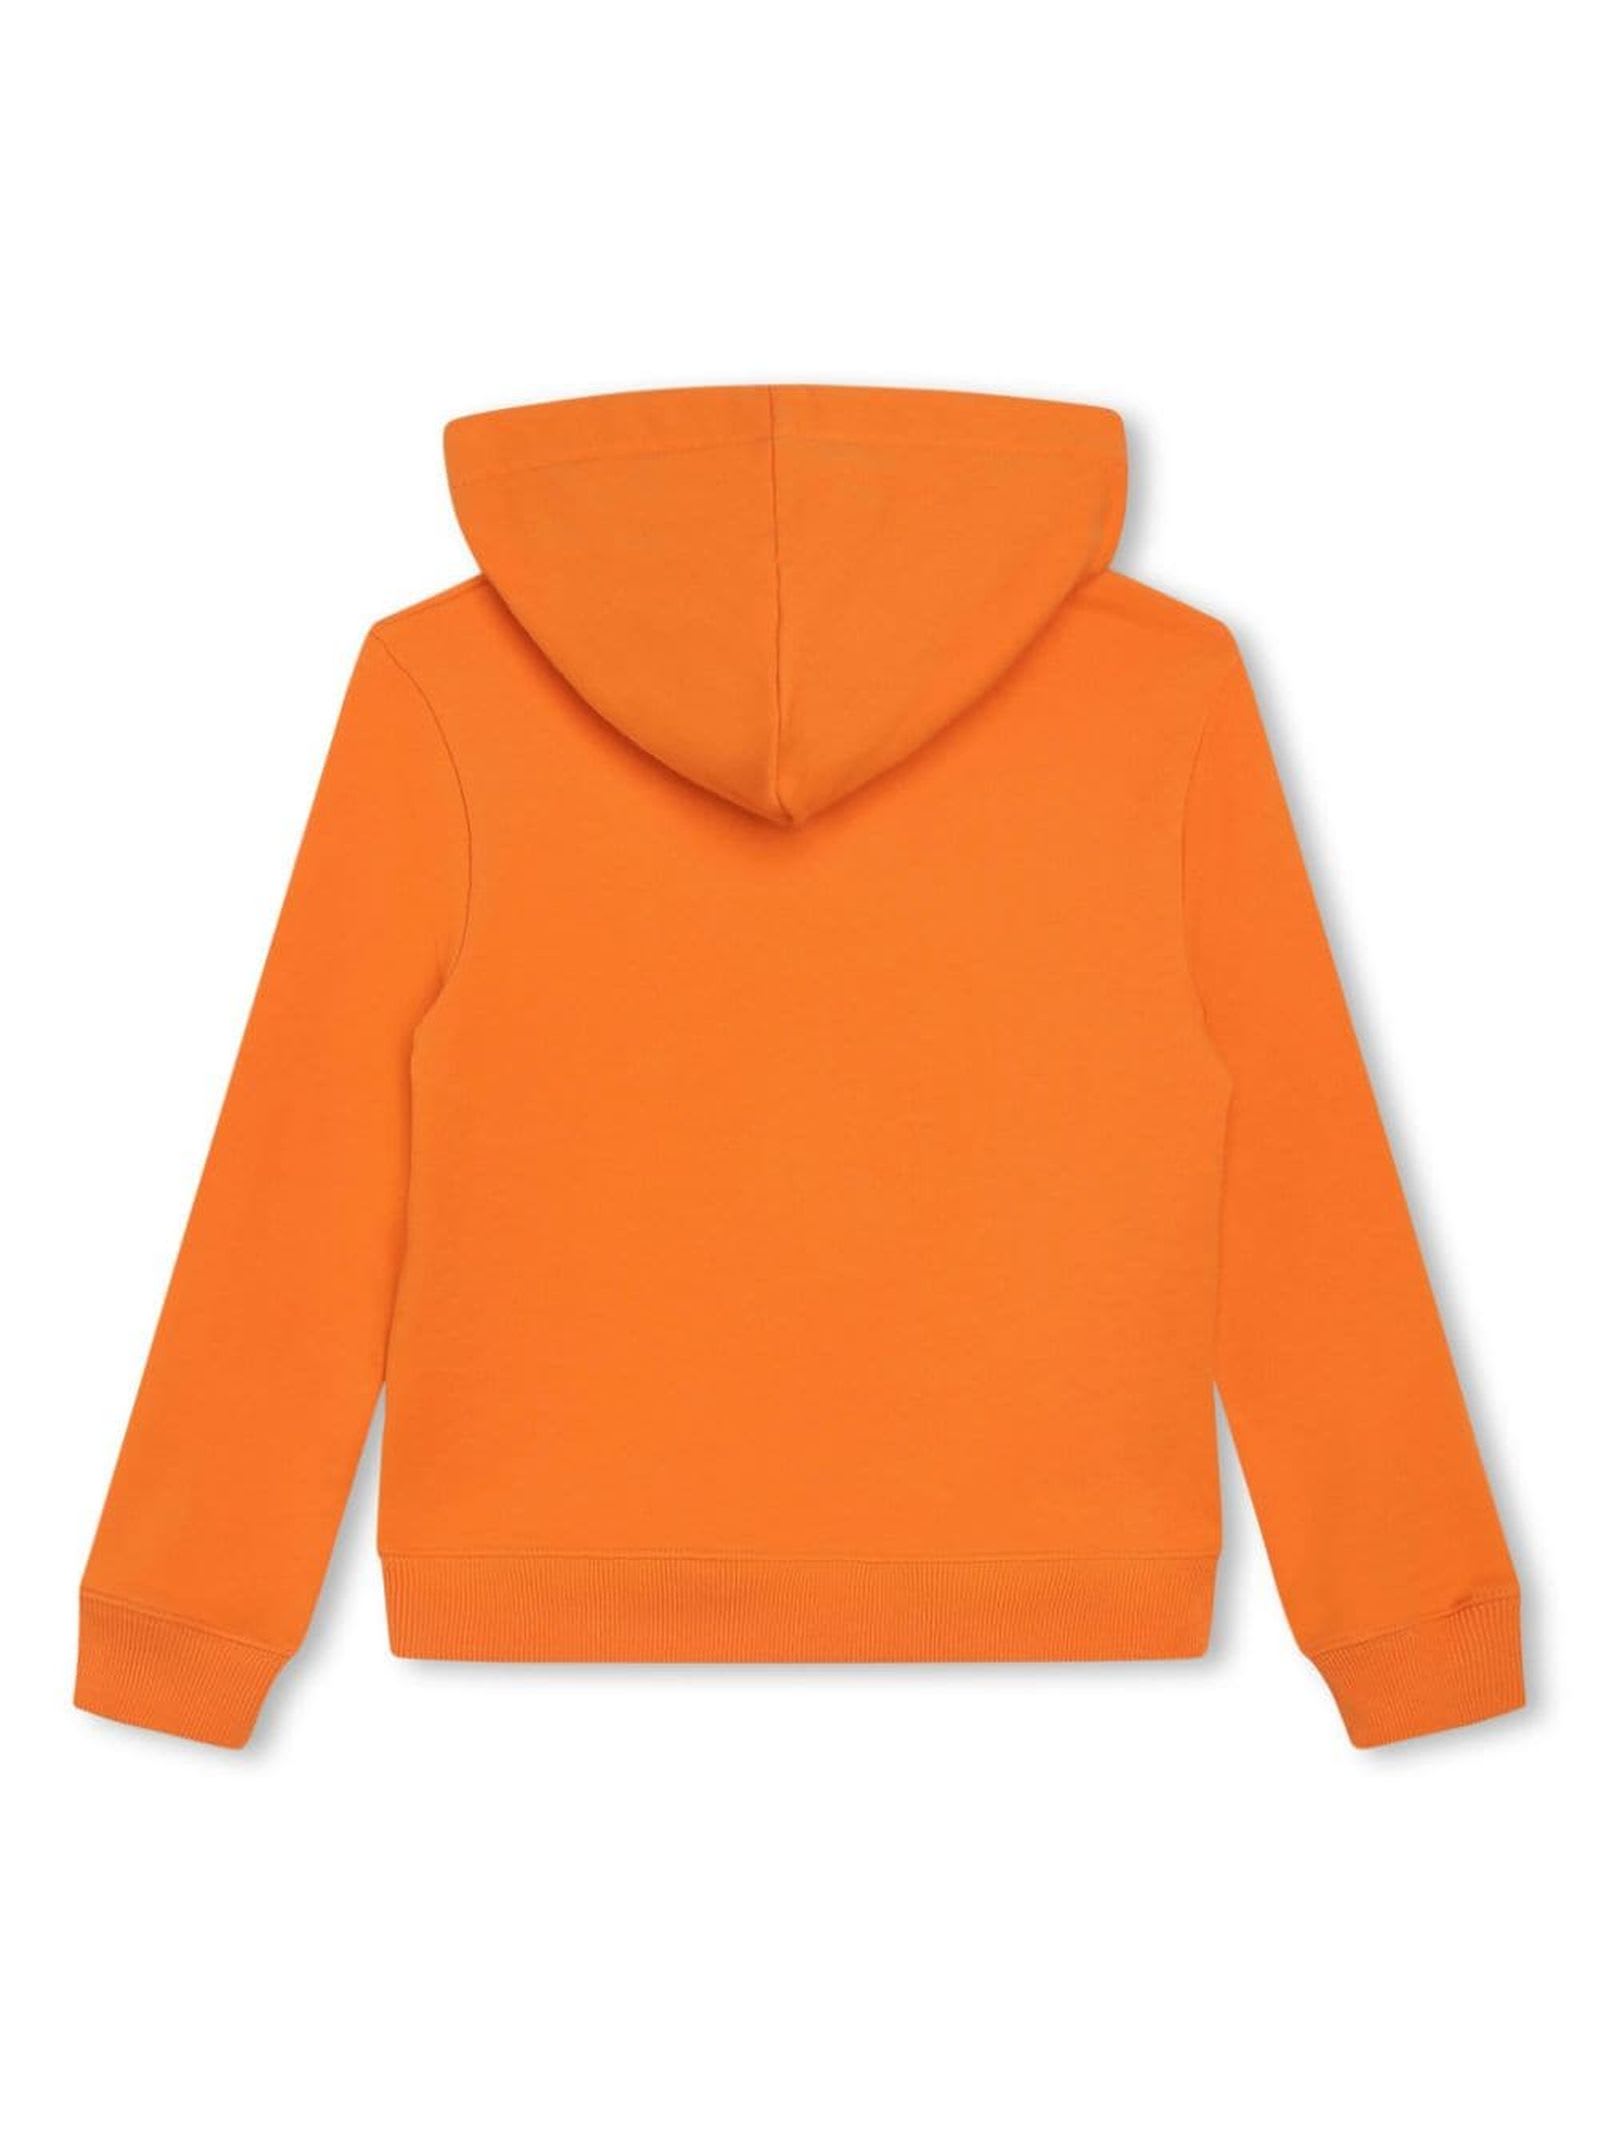 Shop Lanvin Sweaters Orange